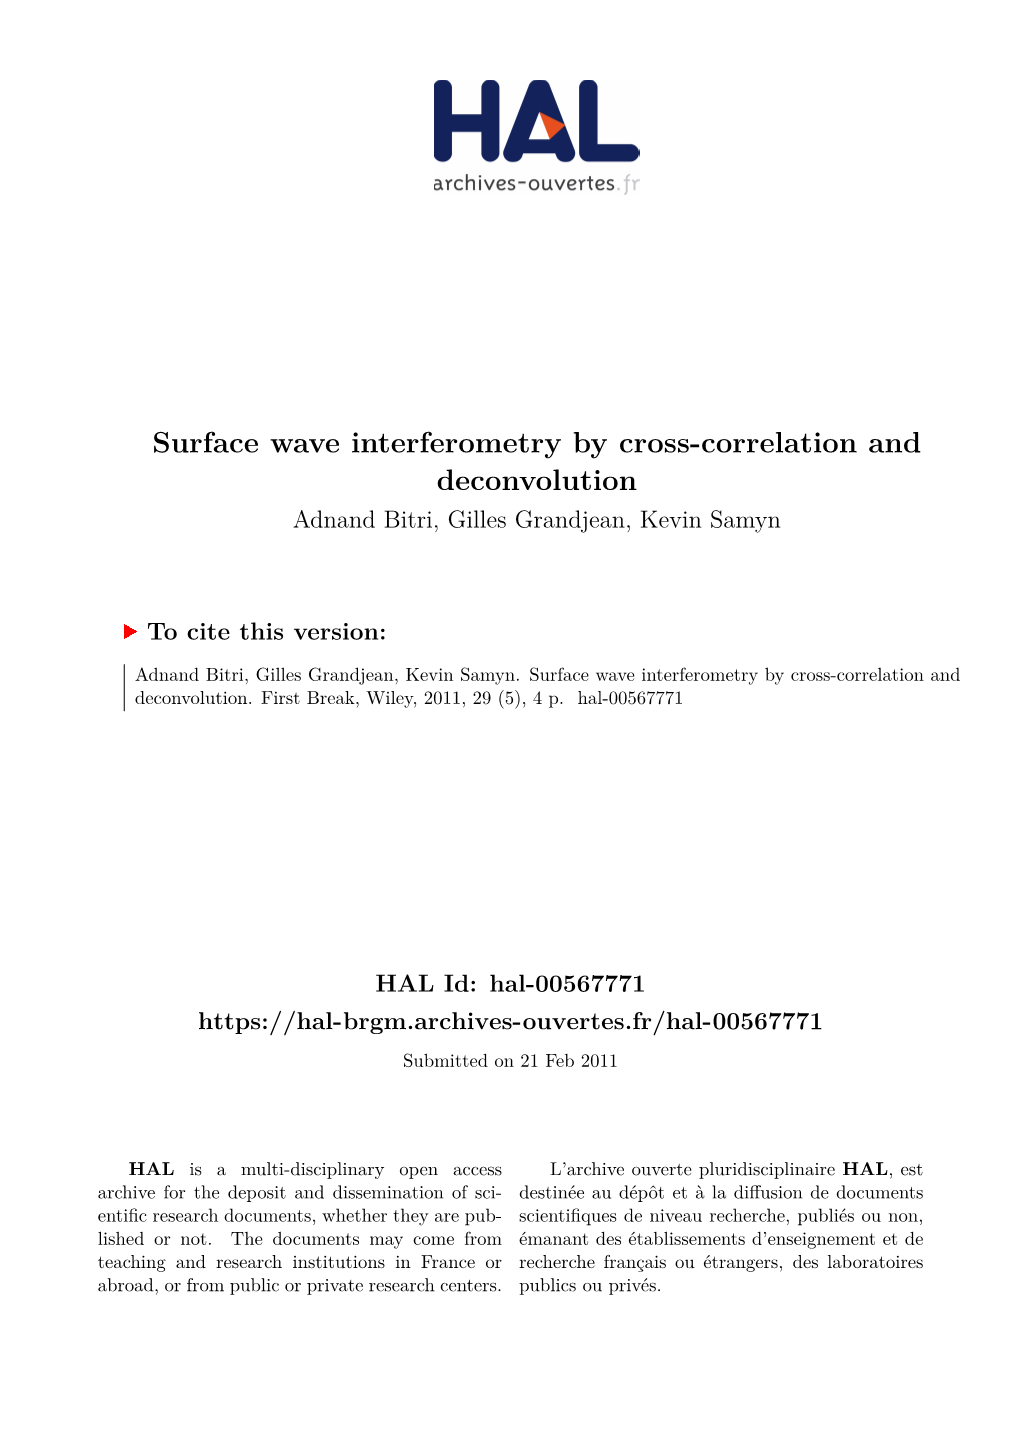 Surface Wave Interferometry by Cross-Correlation and Deconvolution Adnand Bitri, Gilles Grandjean, Kevin Samyn